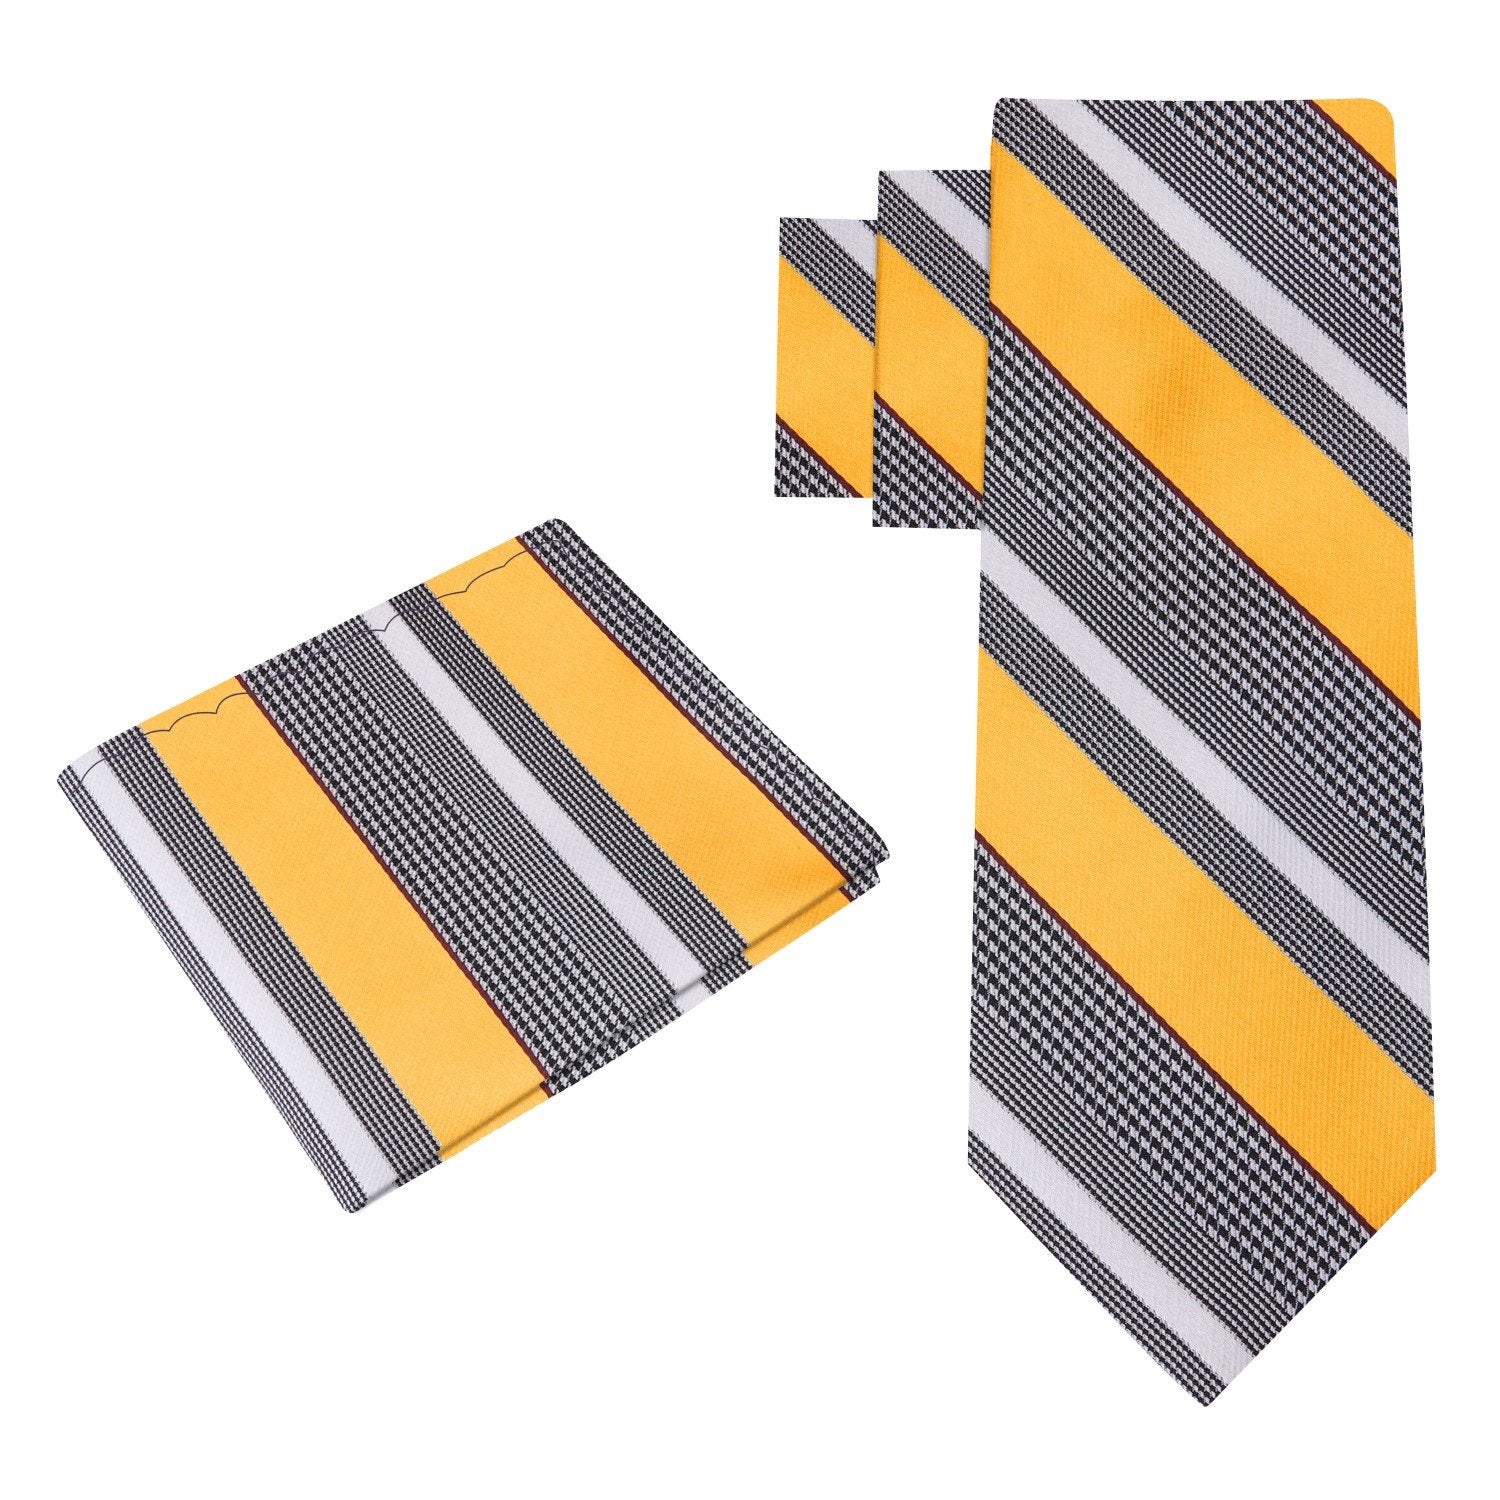 Alt view: A Yellow, Grey, White Color Stripe Pattern Silk Tie, Pocket Square